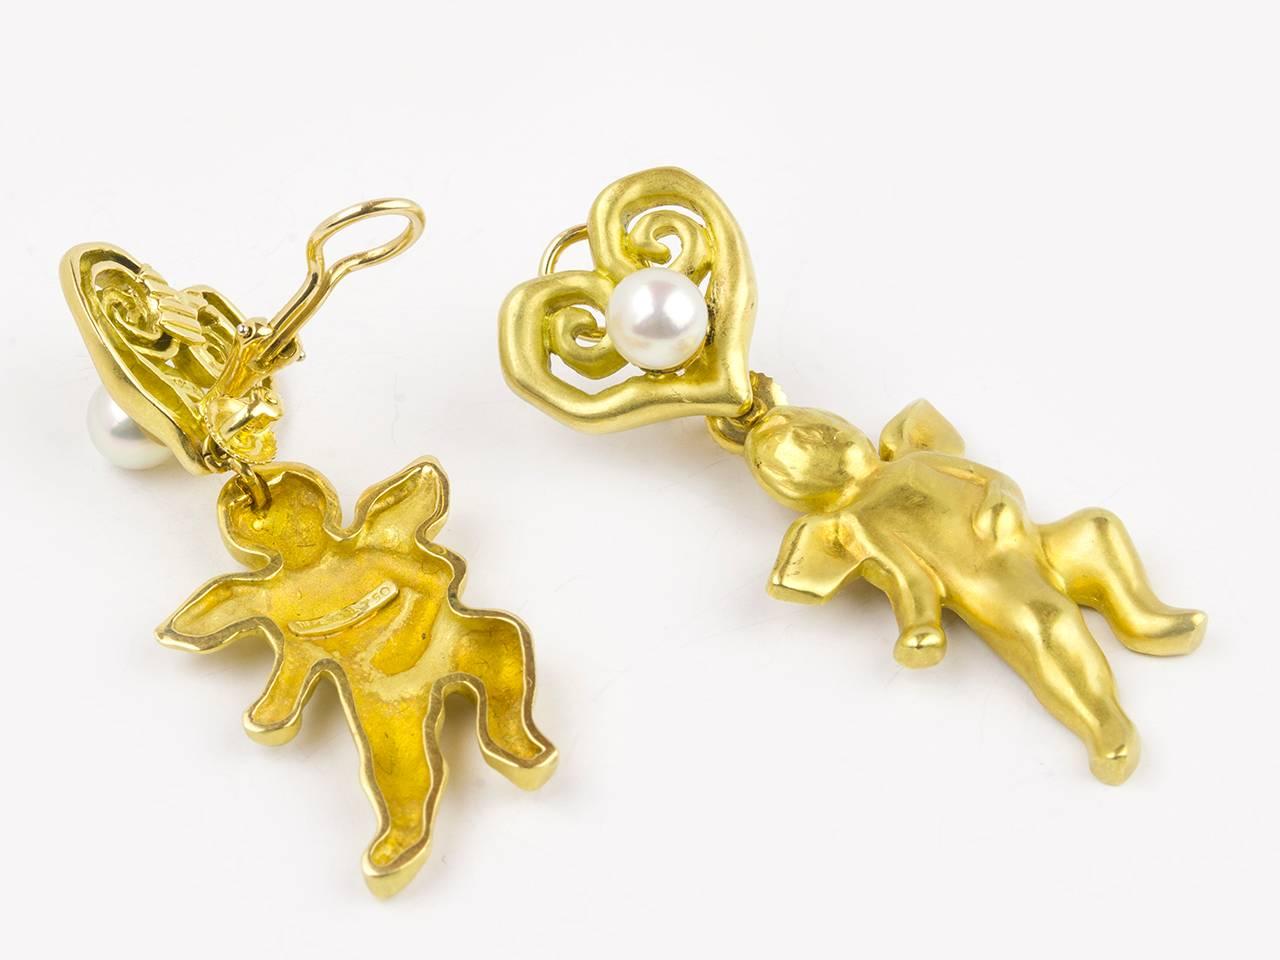 18k  heart- shaped pearl earclips suspending gold cherubs.. Signed TIFFANY & Co.